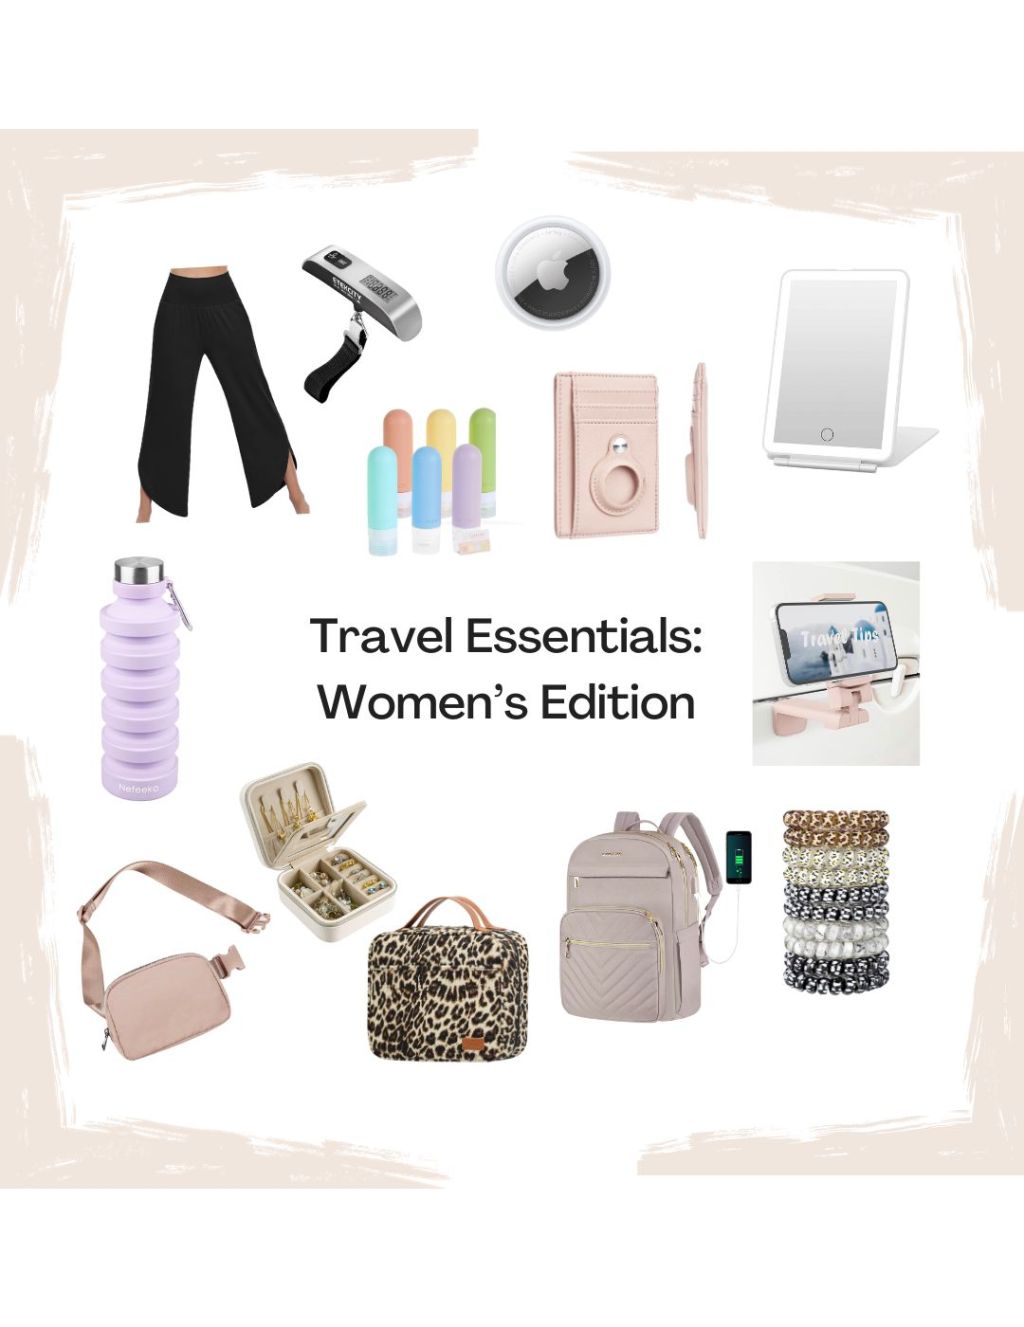 Travel Essentials for Women